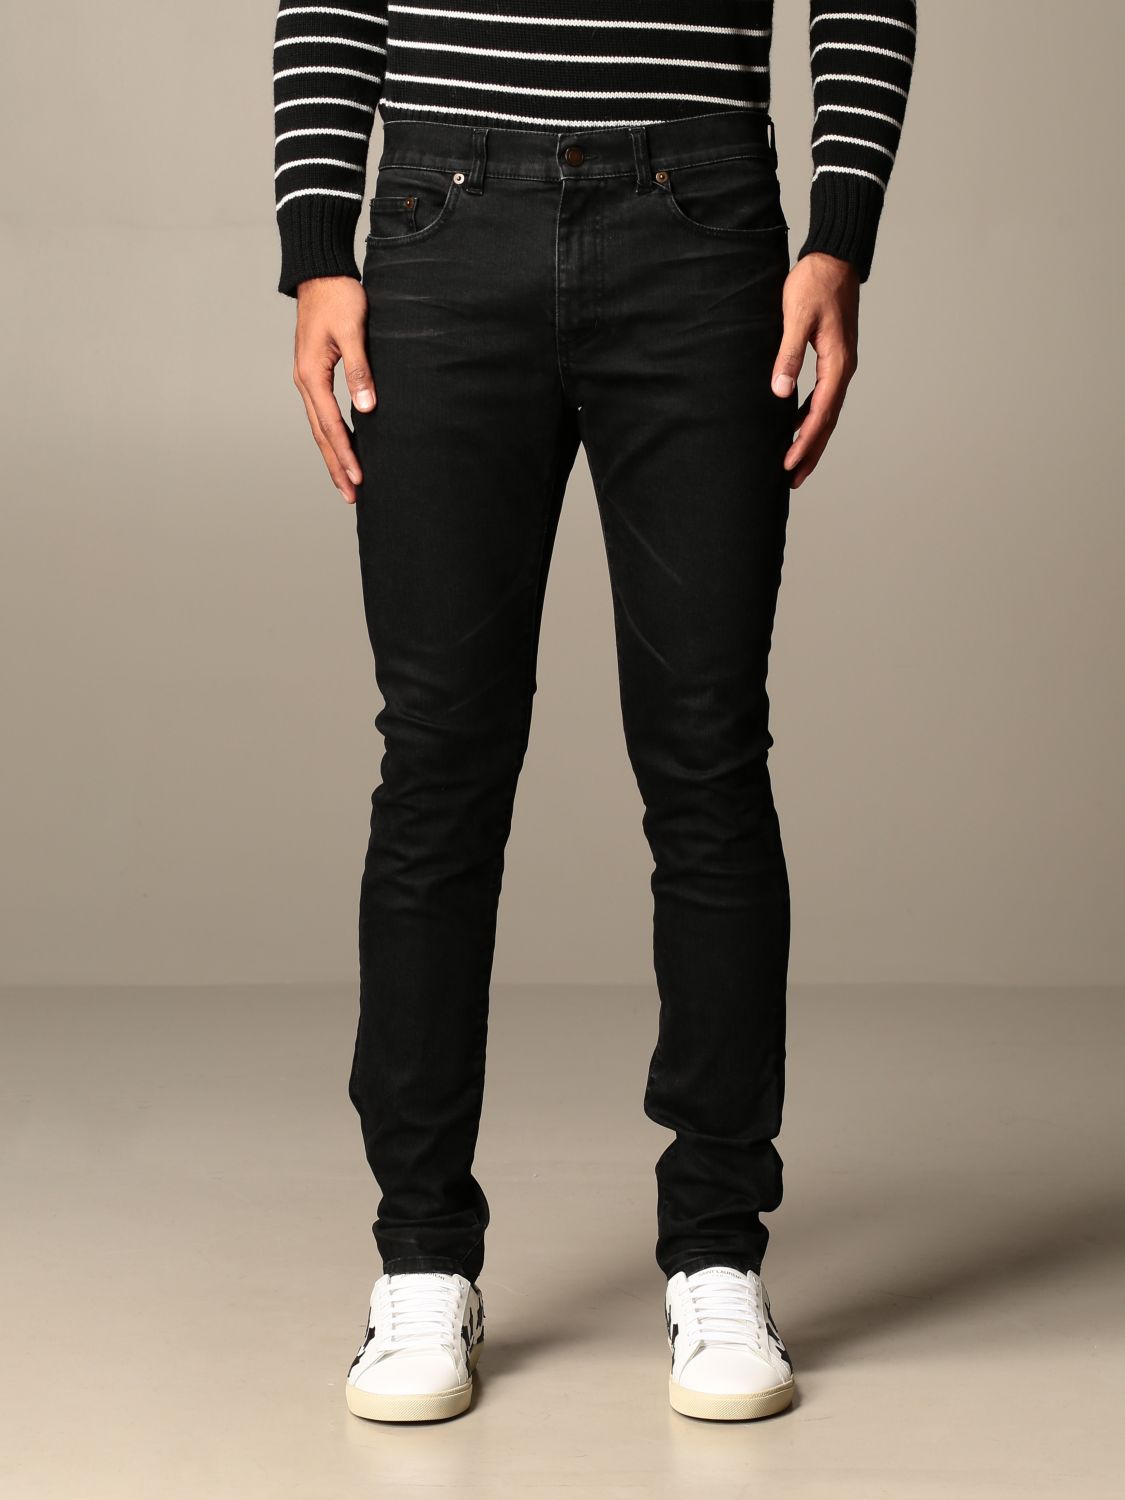 Saint Laurent Outlet: coated stretch skinny jeans - Black | Saint 